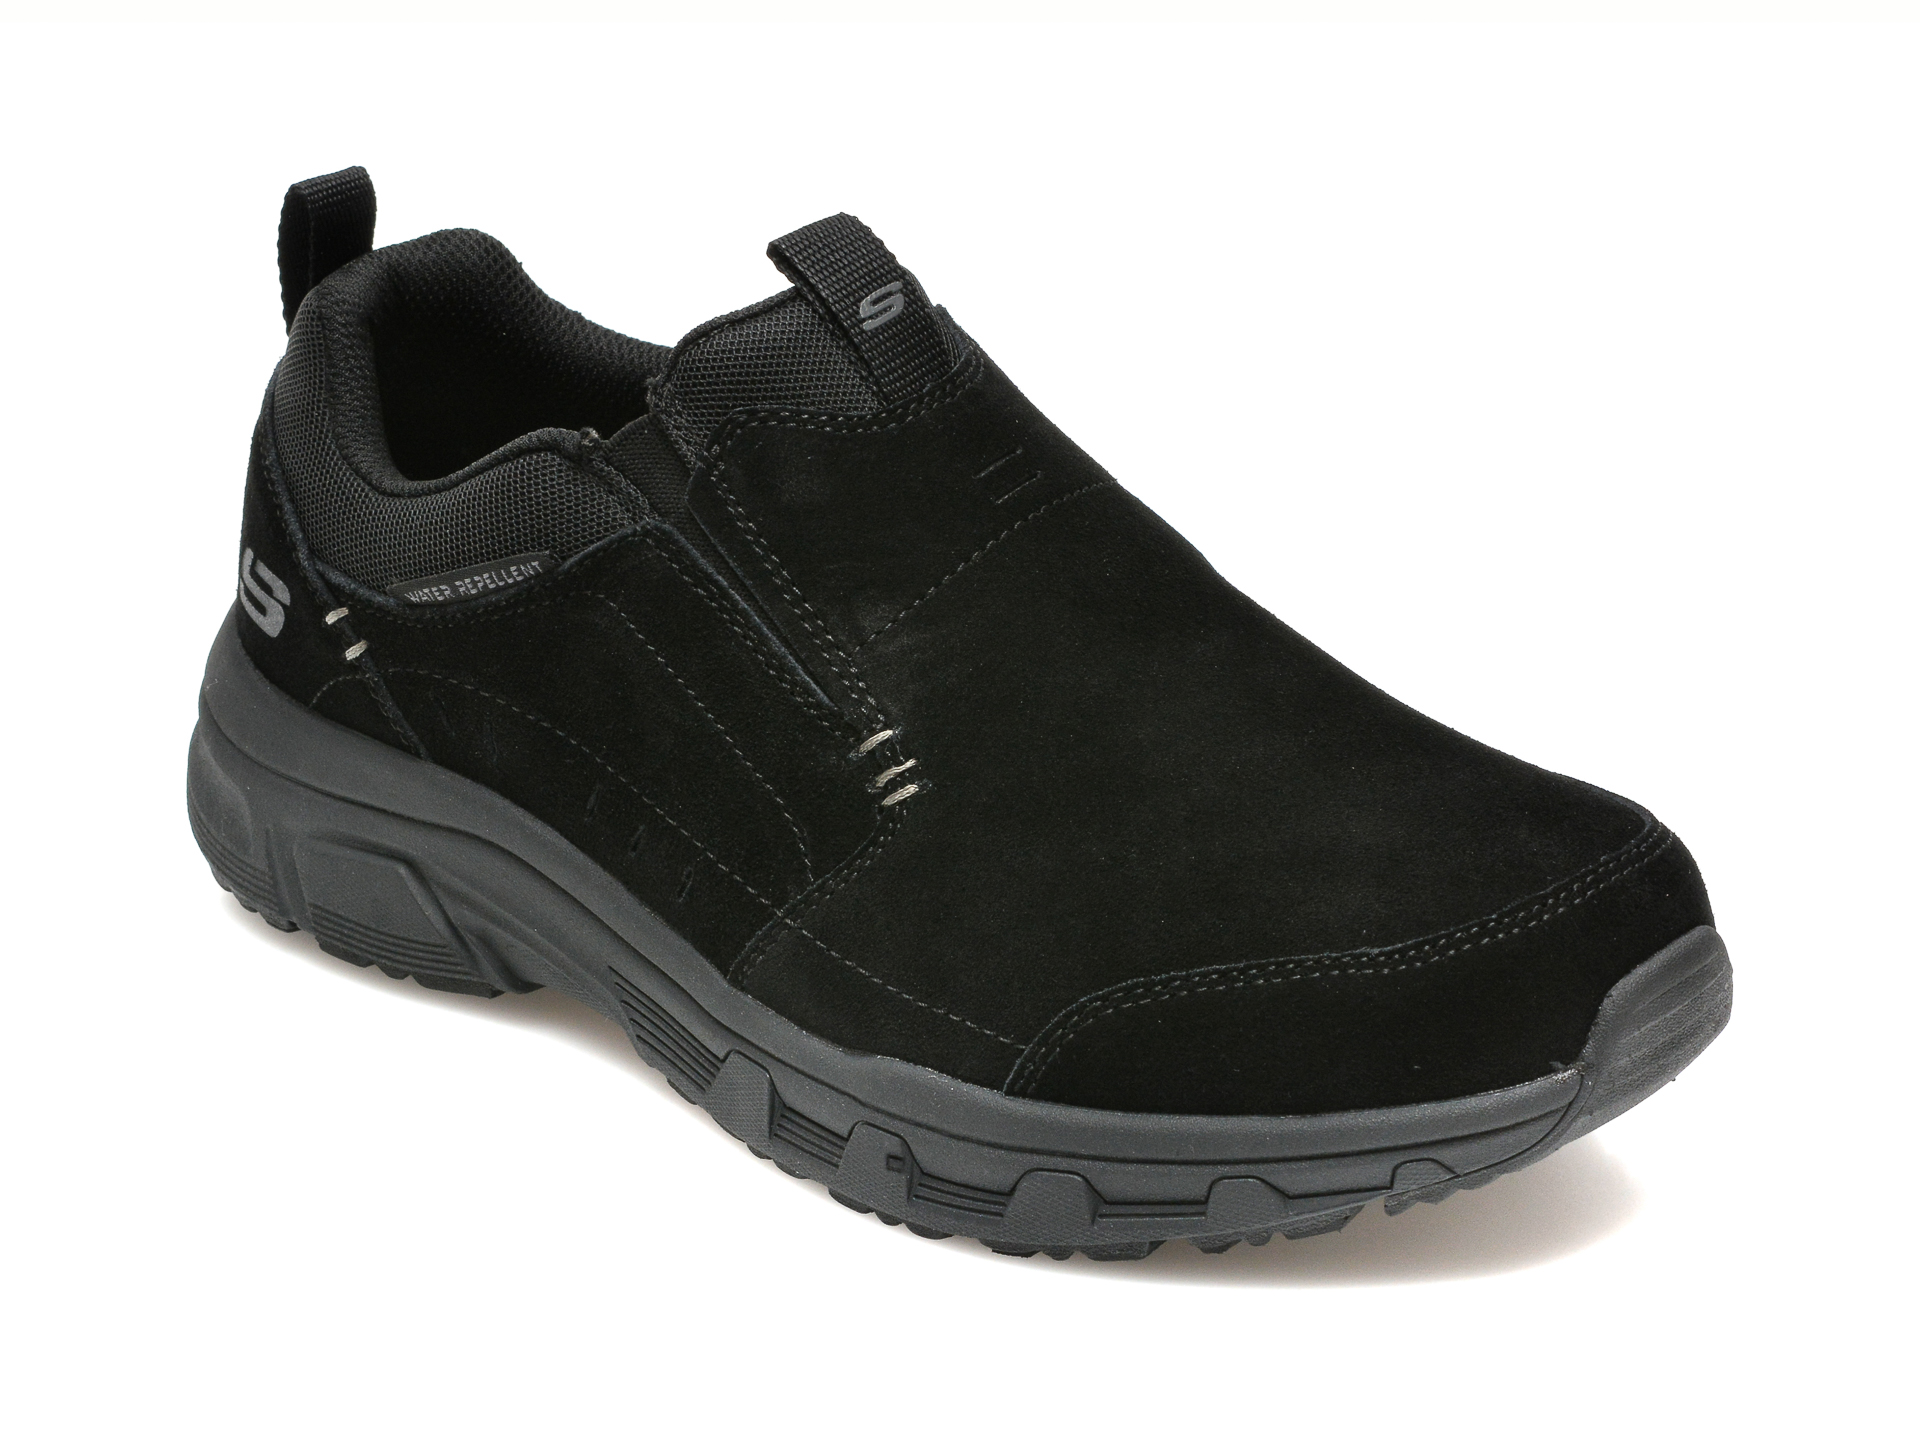 Pantofi sport SKECHERS negri, OAK CANYON, din piele intoarsa Skechers imagine 2022 13clothing.ro